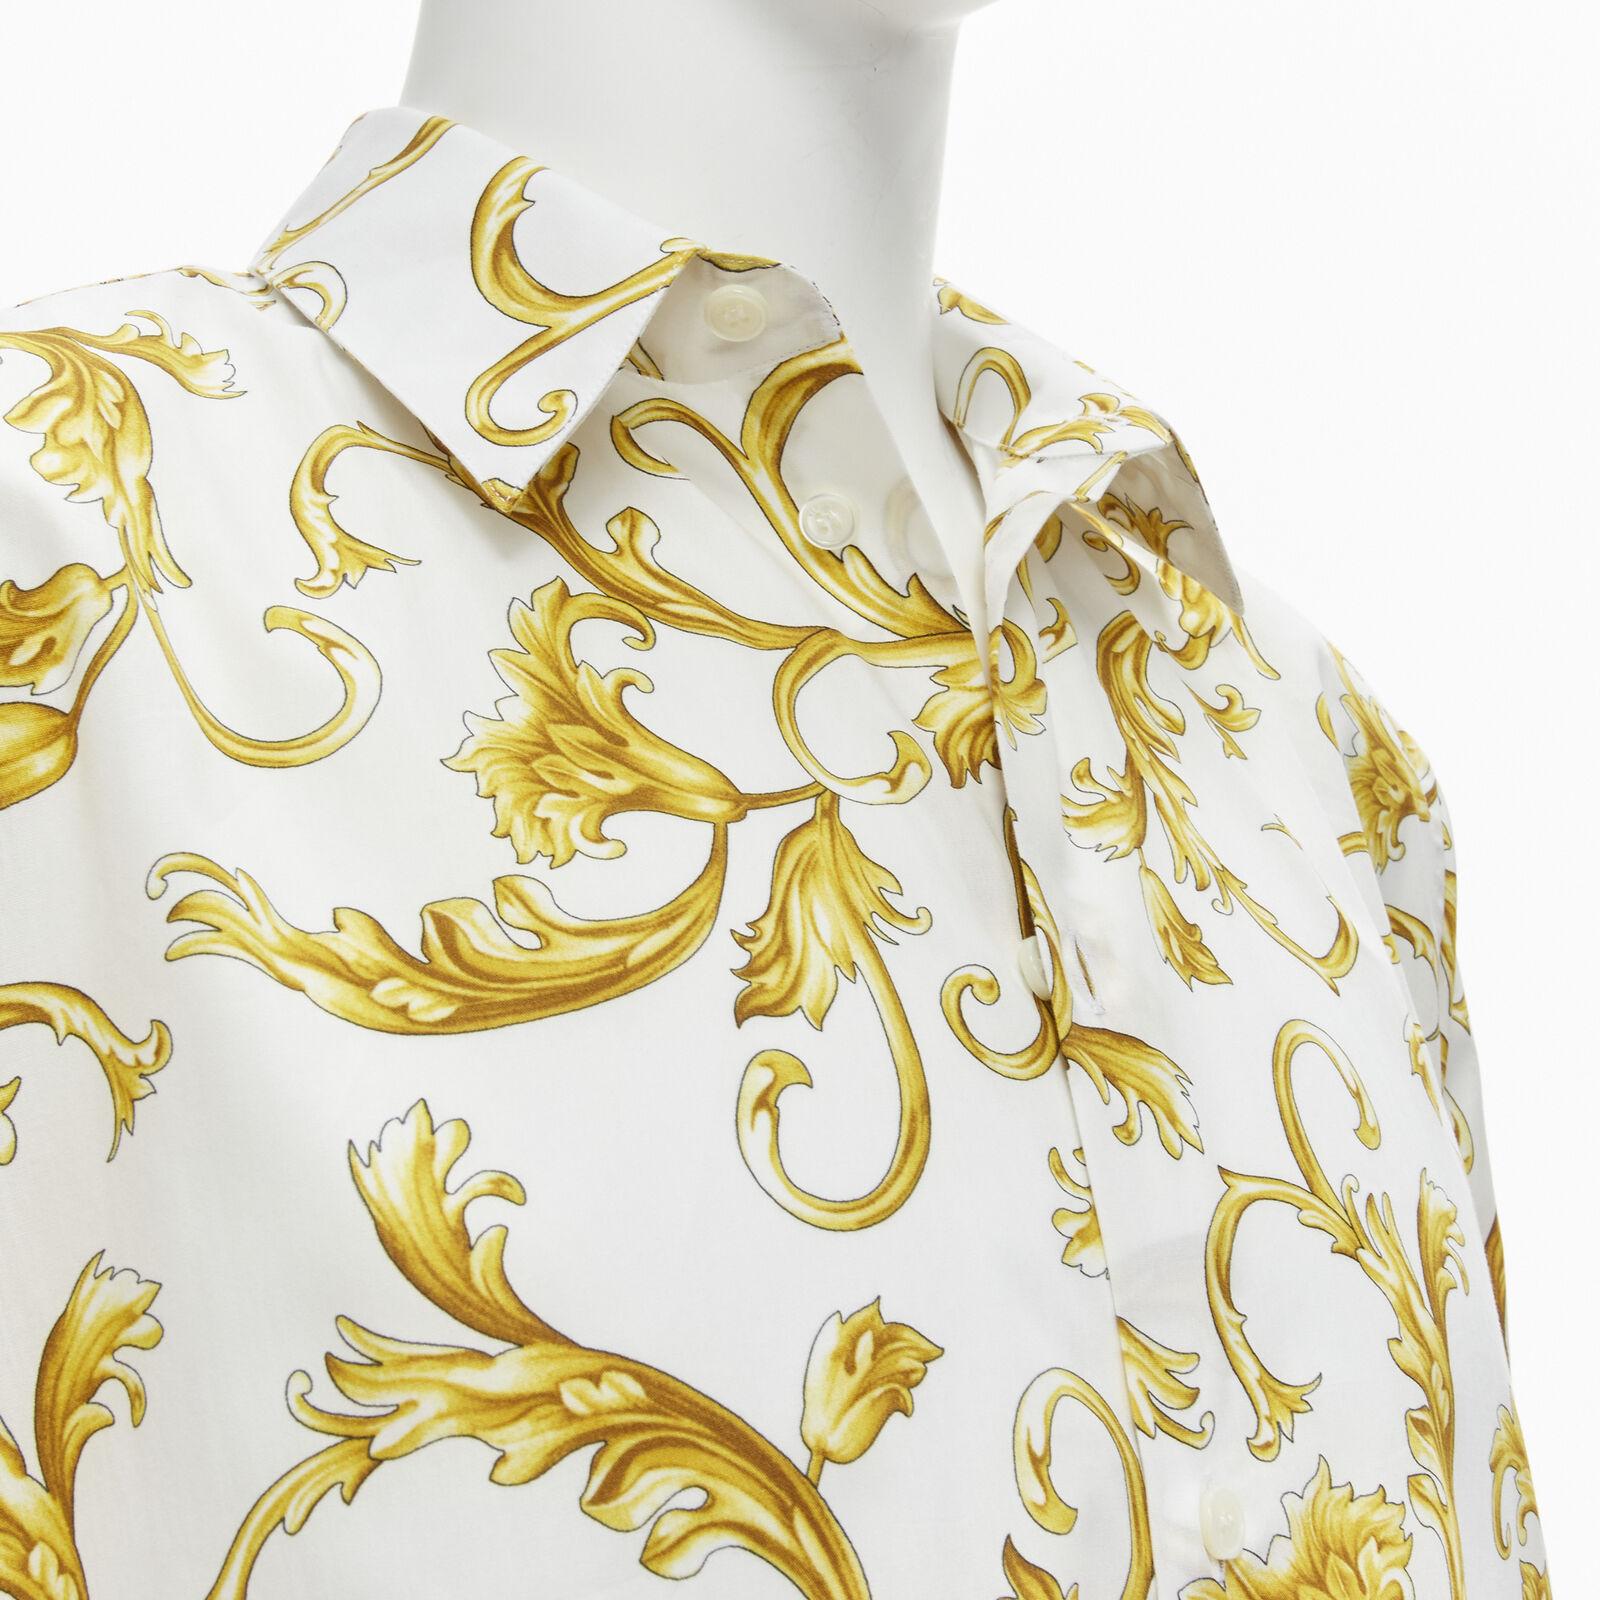 Neues VERSACE Barockes Rokoko-Baumwollhemd mit Blumenblatt EU48 M / L
Referenz: TGAS/C01472
Marke: Versace
Designer: Donatella Versace
Modell: A77215S
Collection'S: Versace Barocco
MATERIAL: Baumwolle
Farbe: Weiß, Gold
Muster: Barocco
Verschluss: